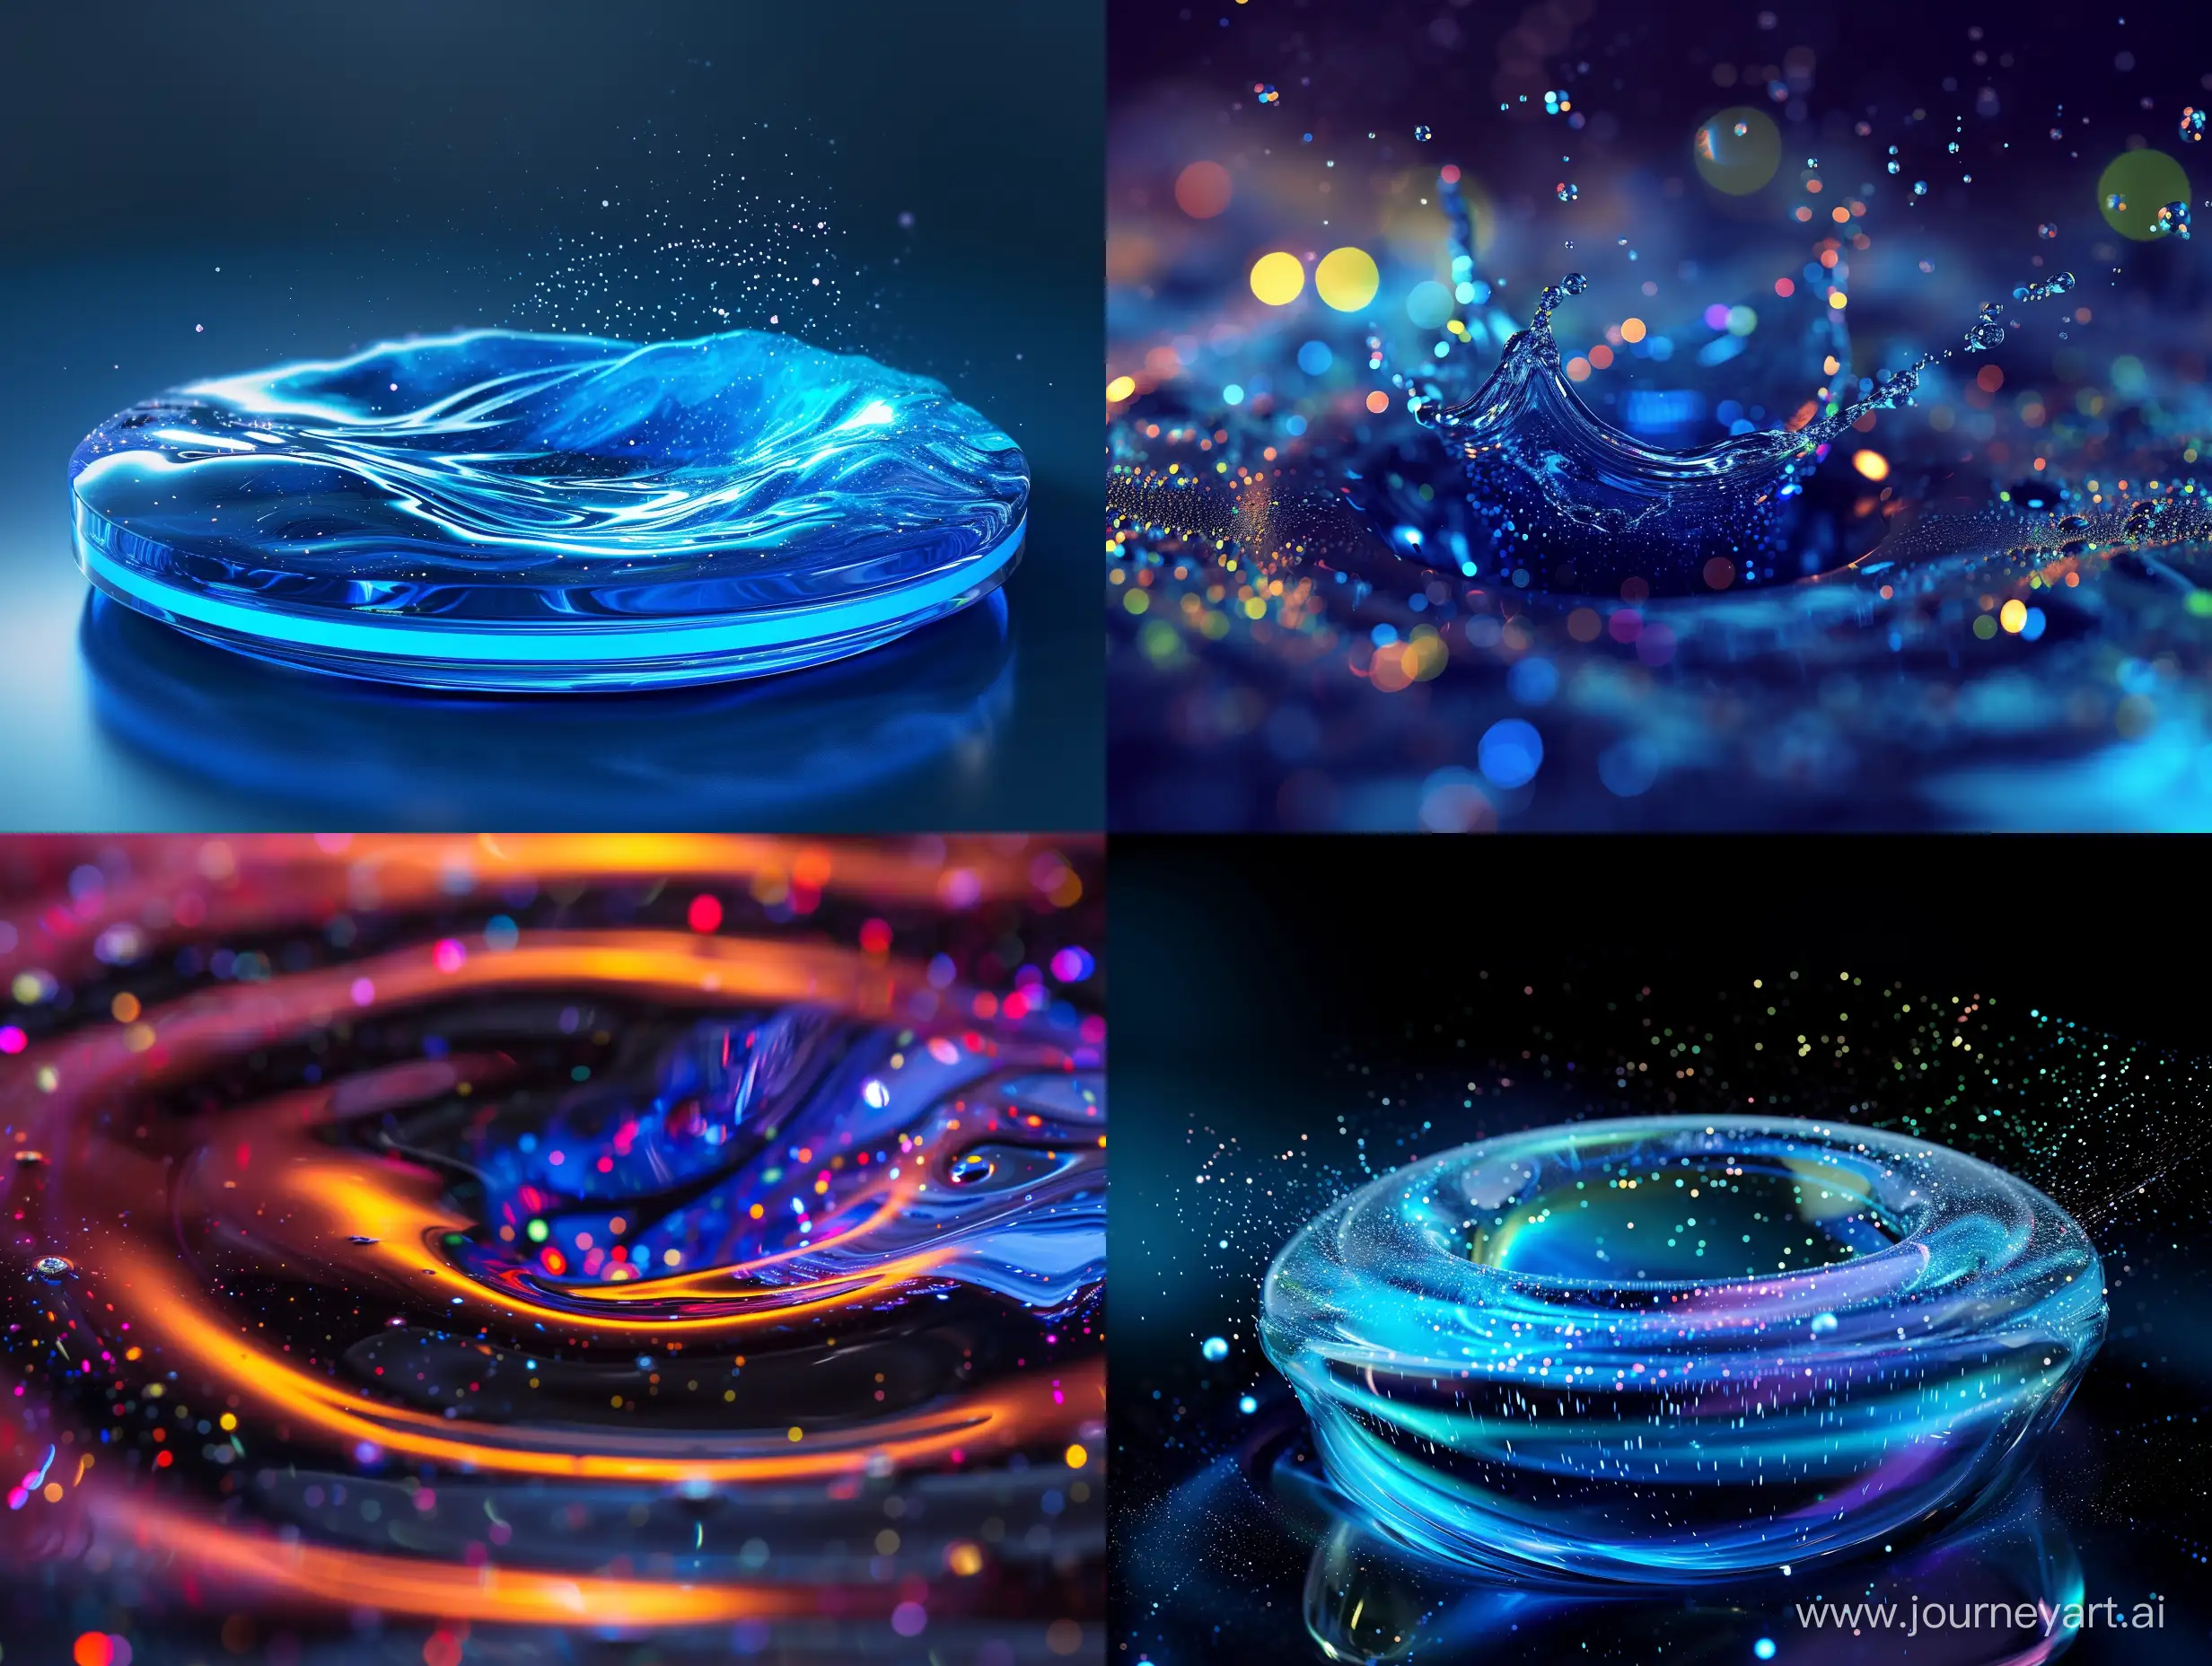 Dynamic liquid flow with luminous particles fashionable liquid lid design